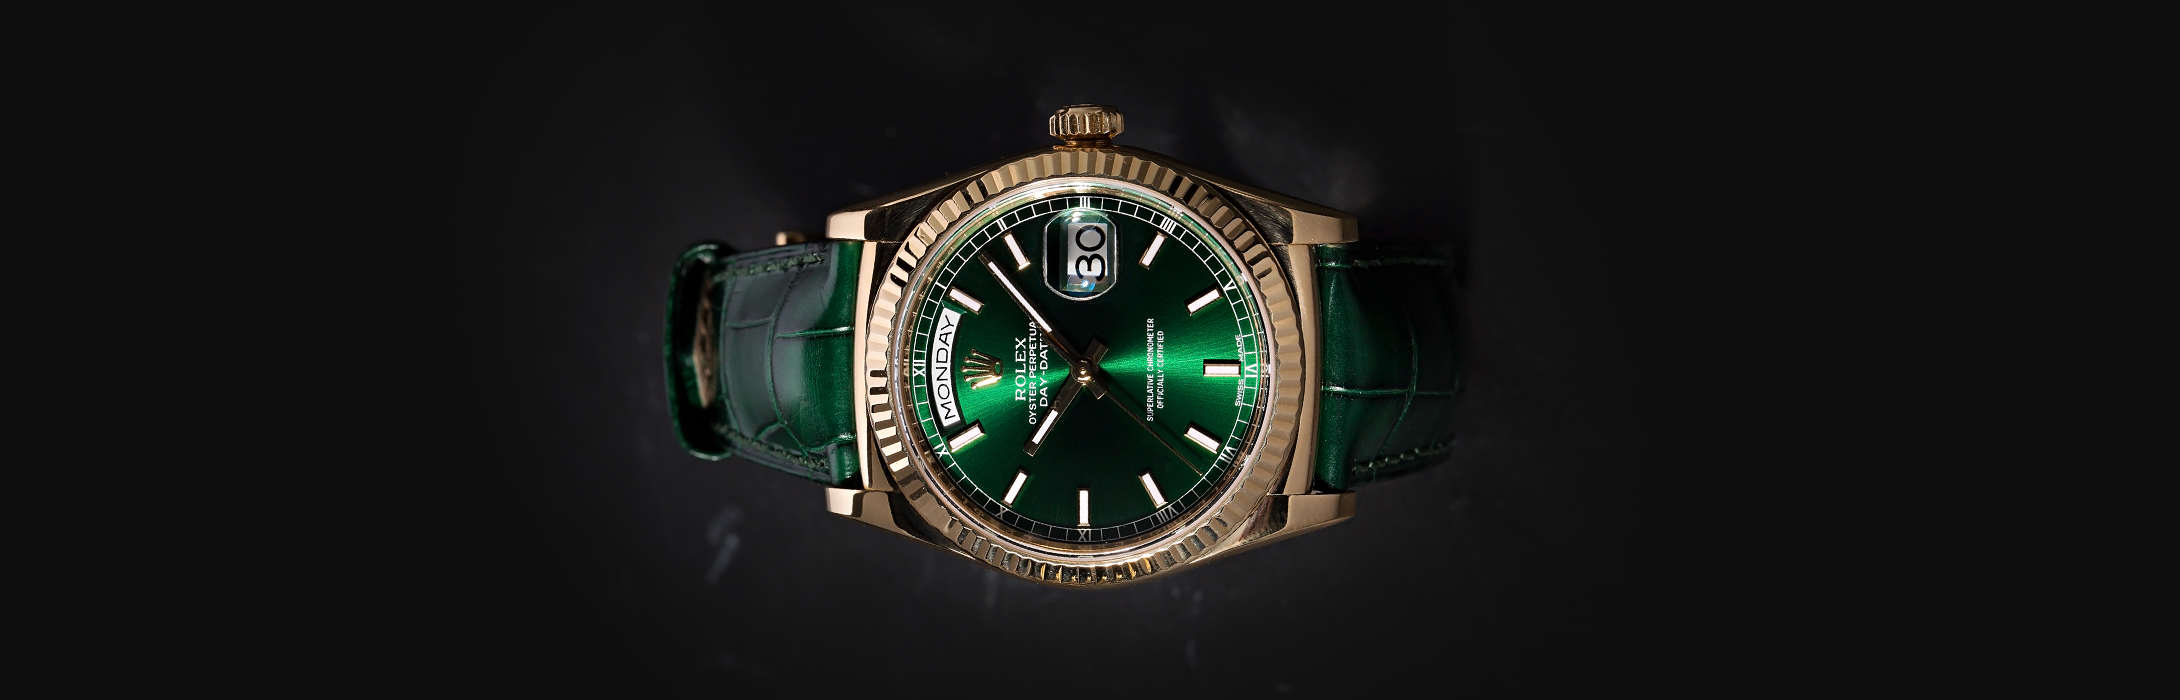 Rolex Submariner Green Case Wristwatches for sale